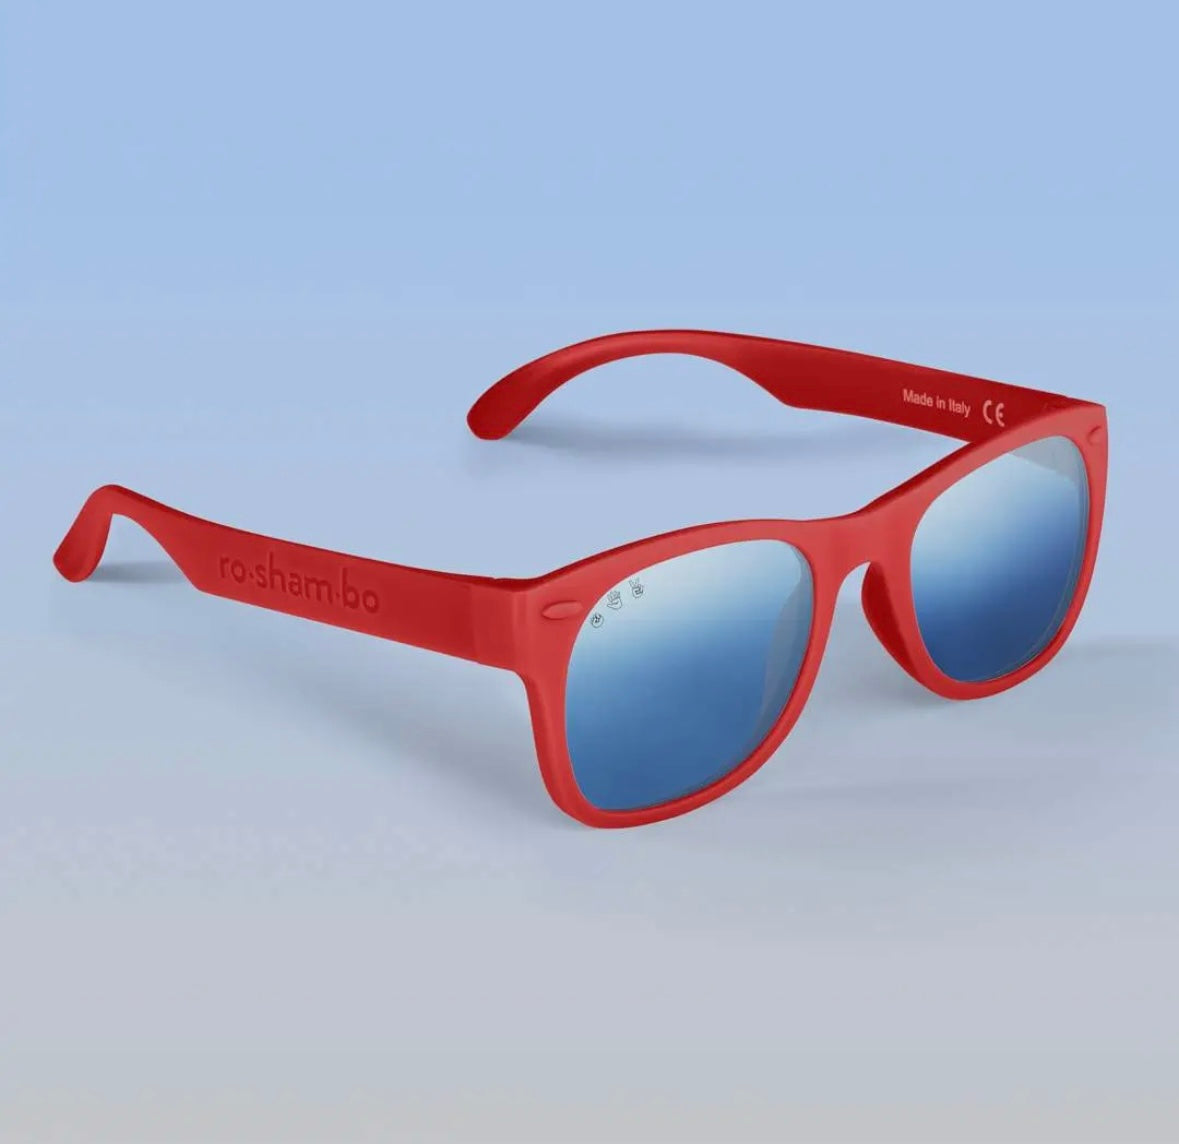 Roshambo Toddler Sunglasses - Red McFly, Grey Lens